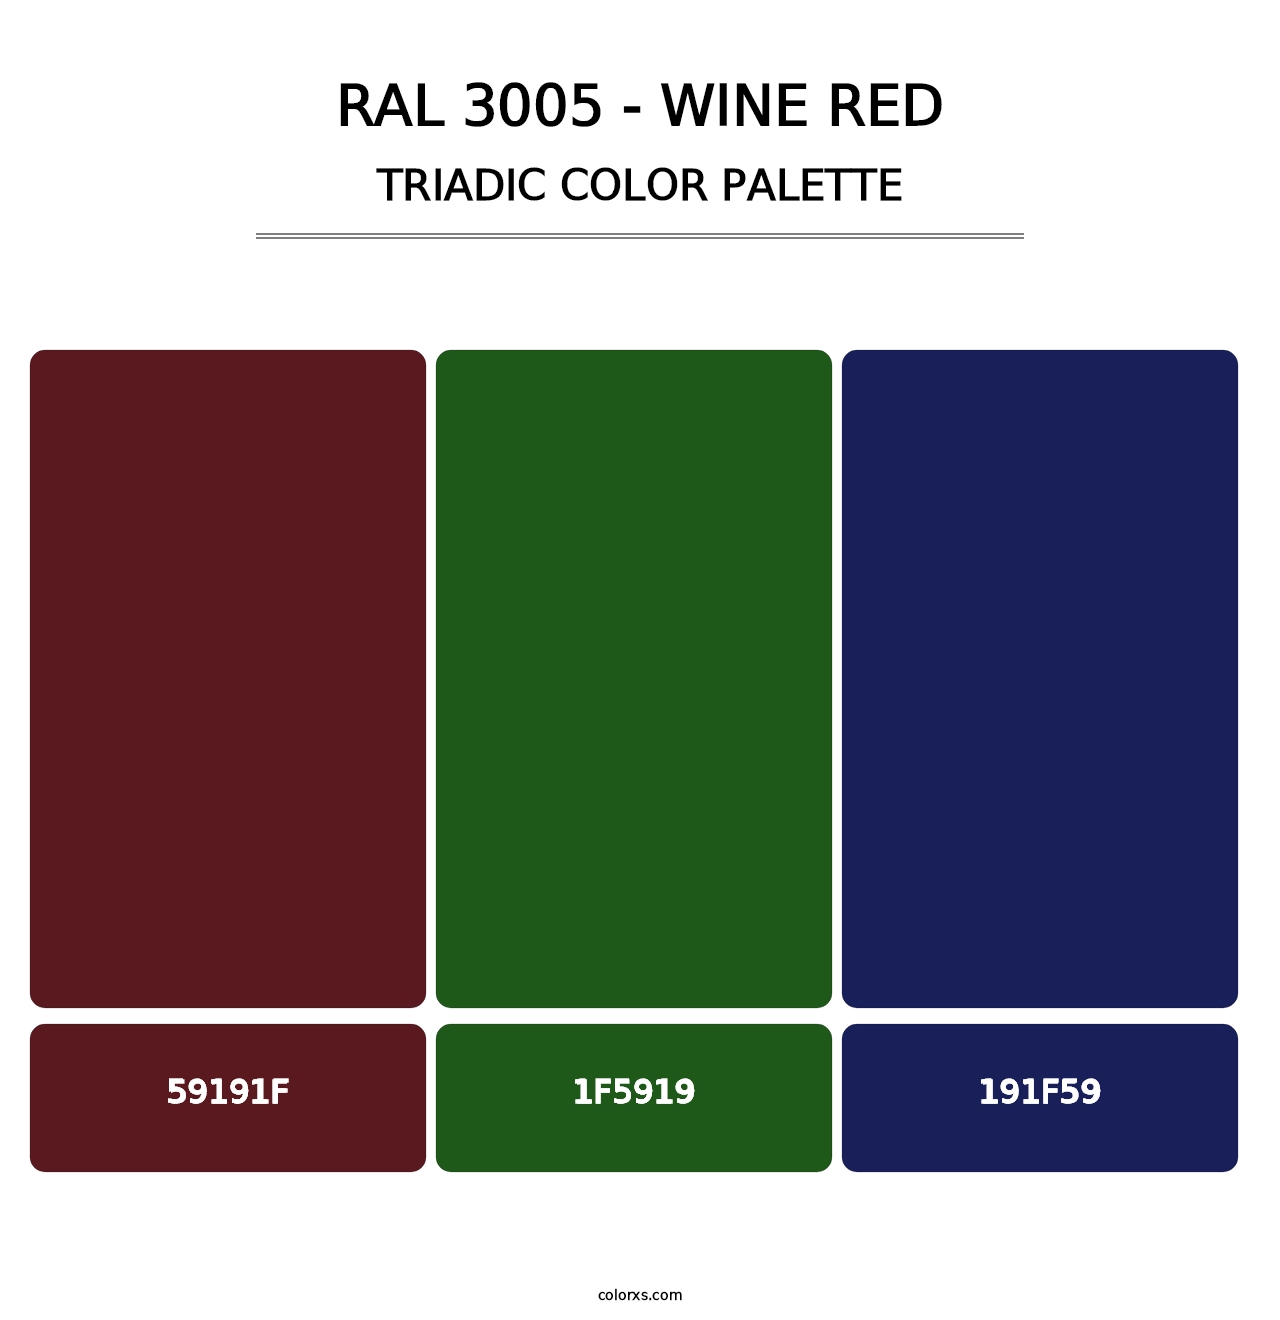 RAL 3005 - Wine Red - Triadic Color Palette